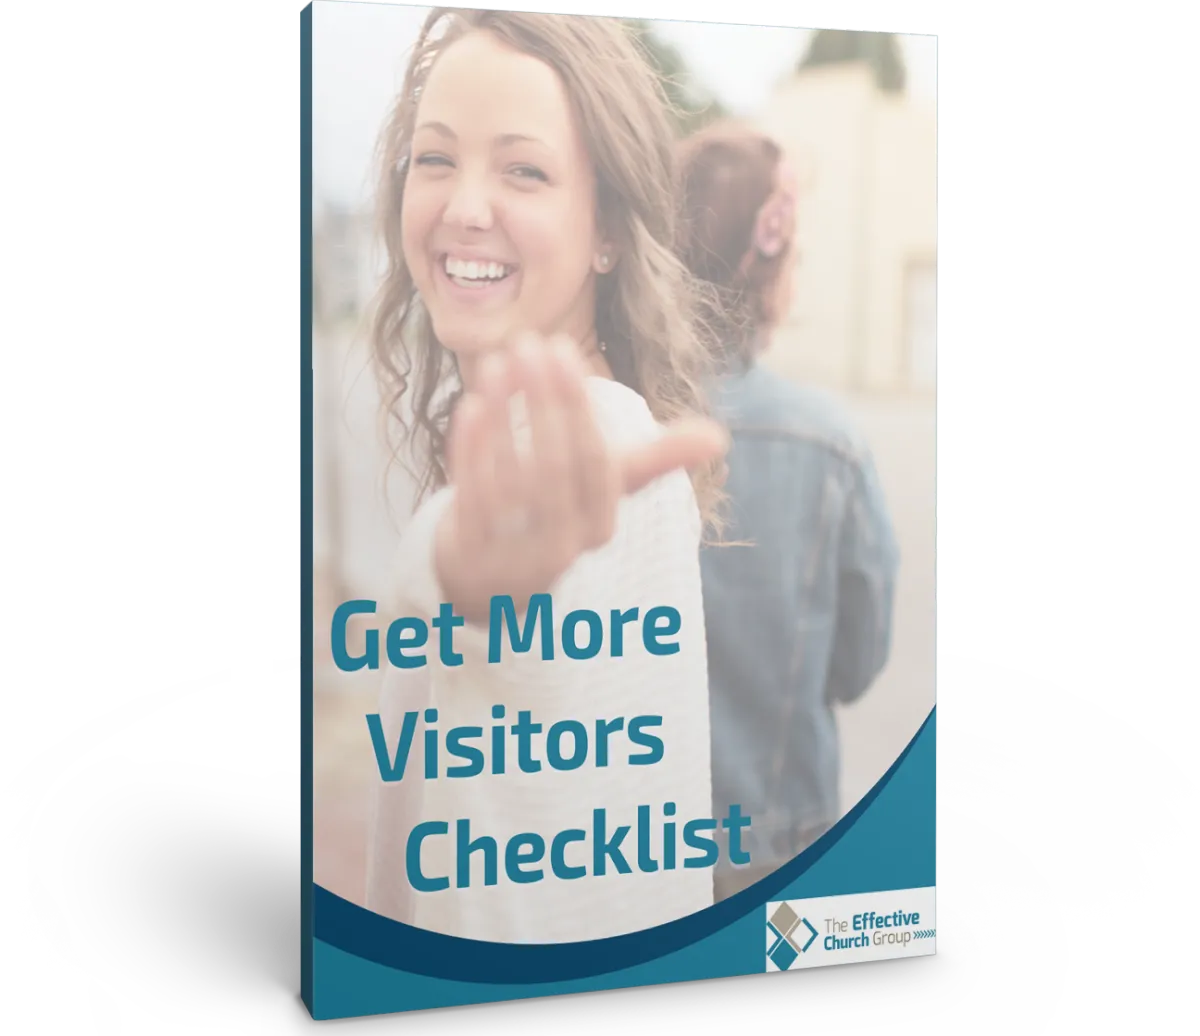 Get More Visitors Checklist Image